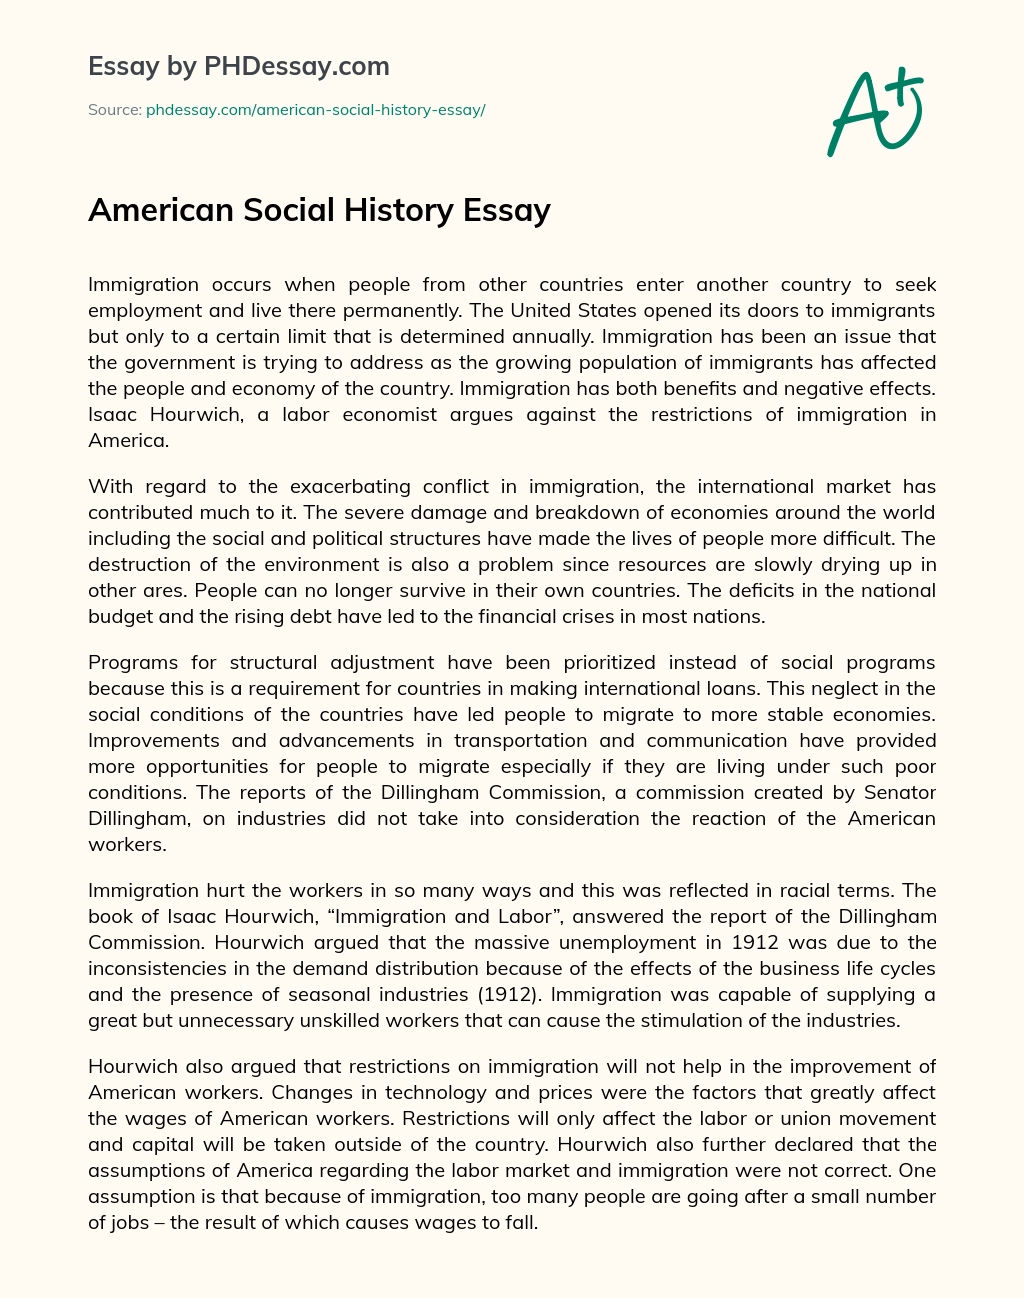 American Social History Essay essay